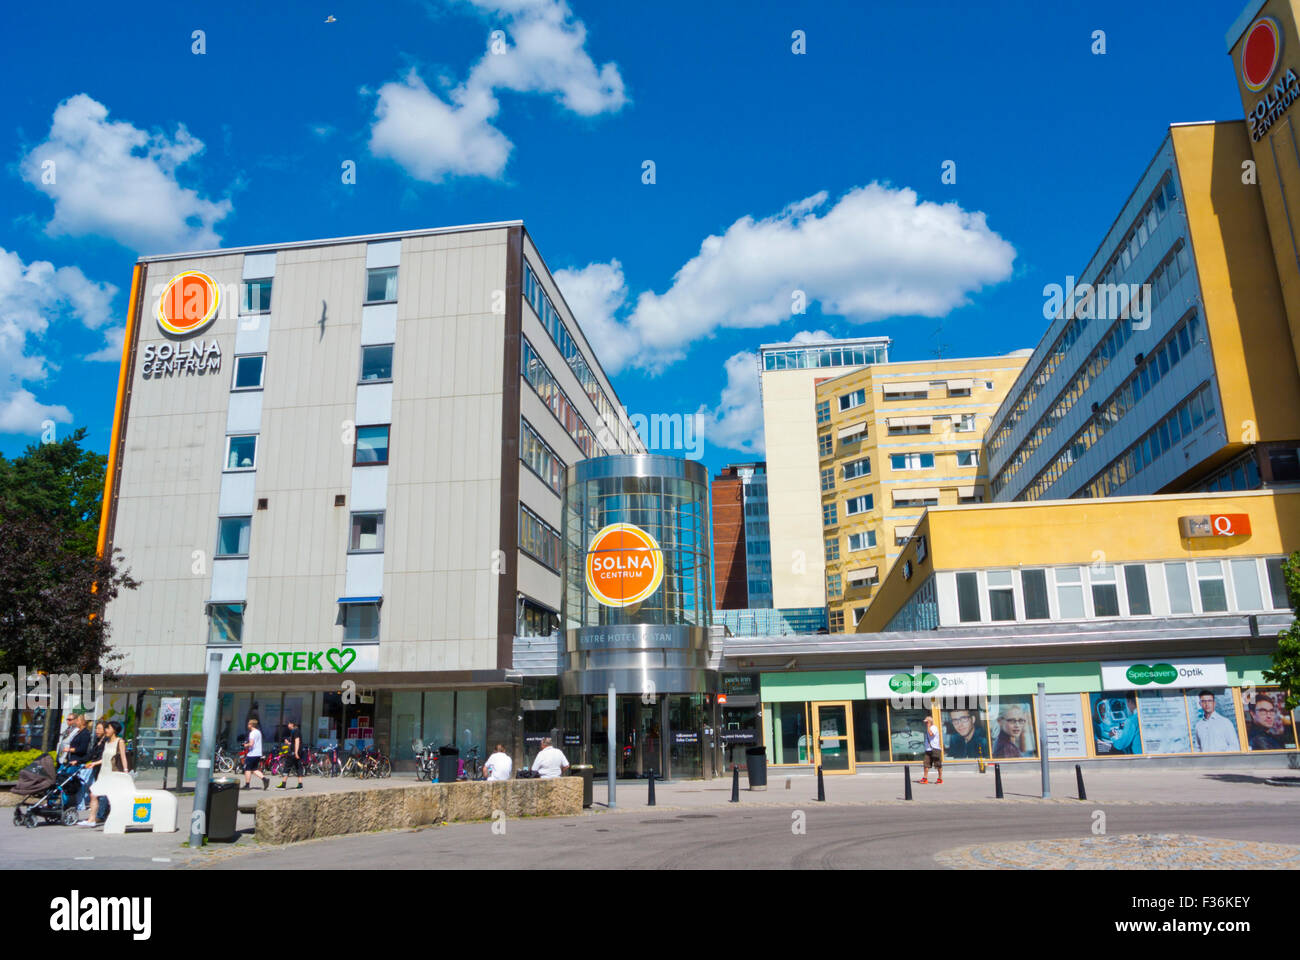 Solna centrum shopping centre, Solna Torg, Solna district, Stockholm